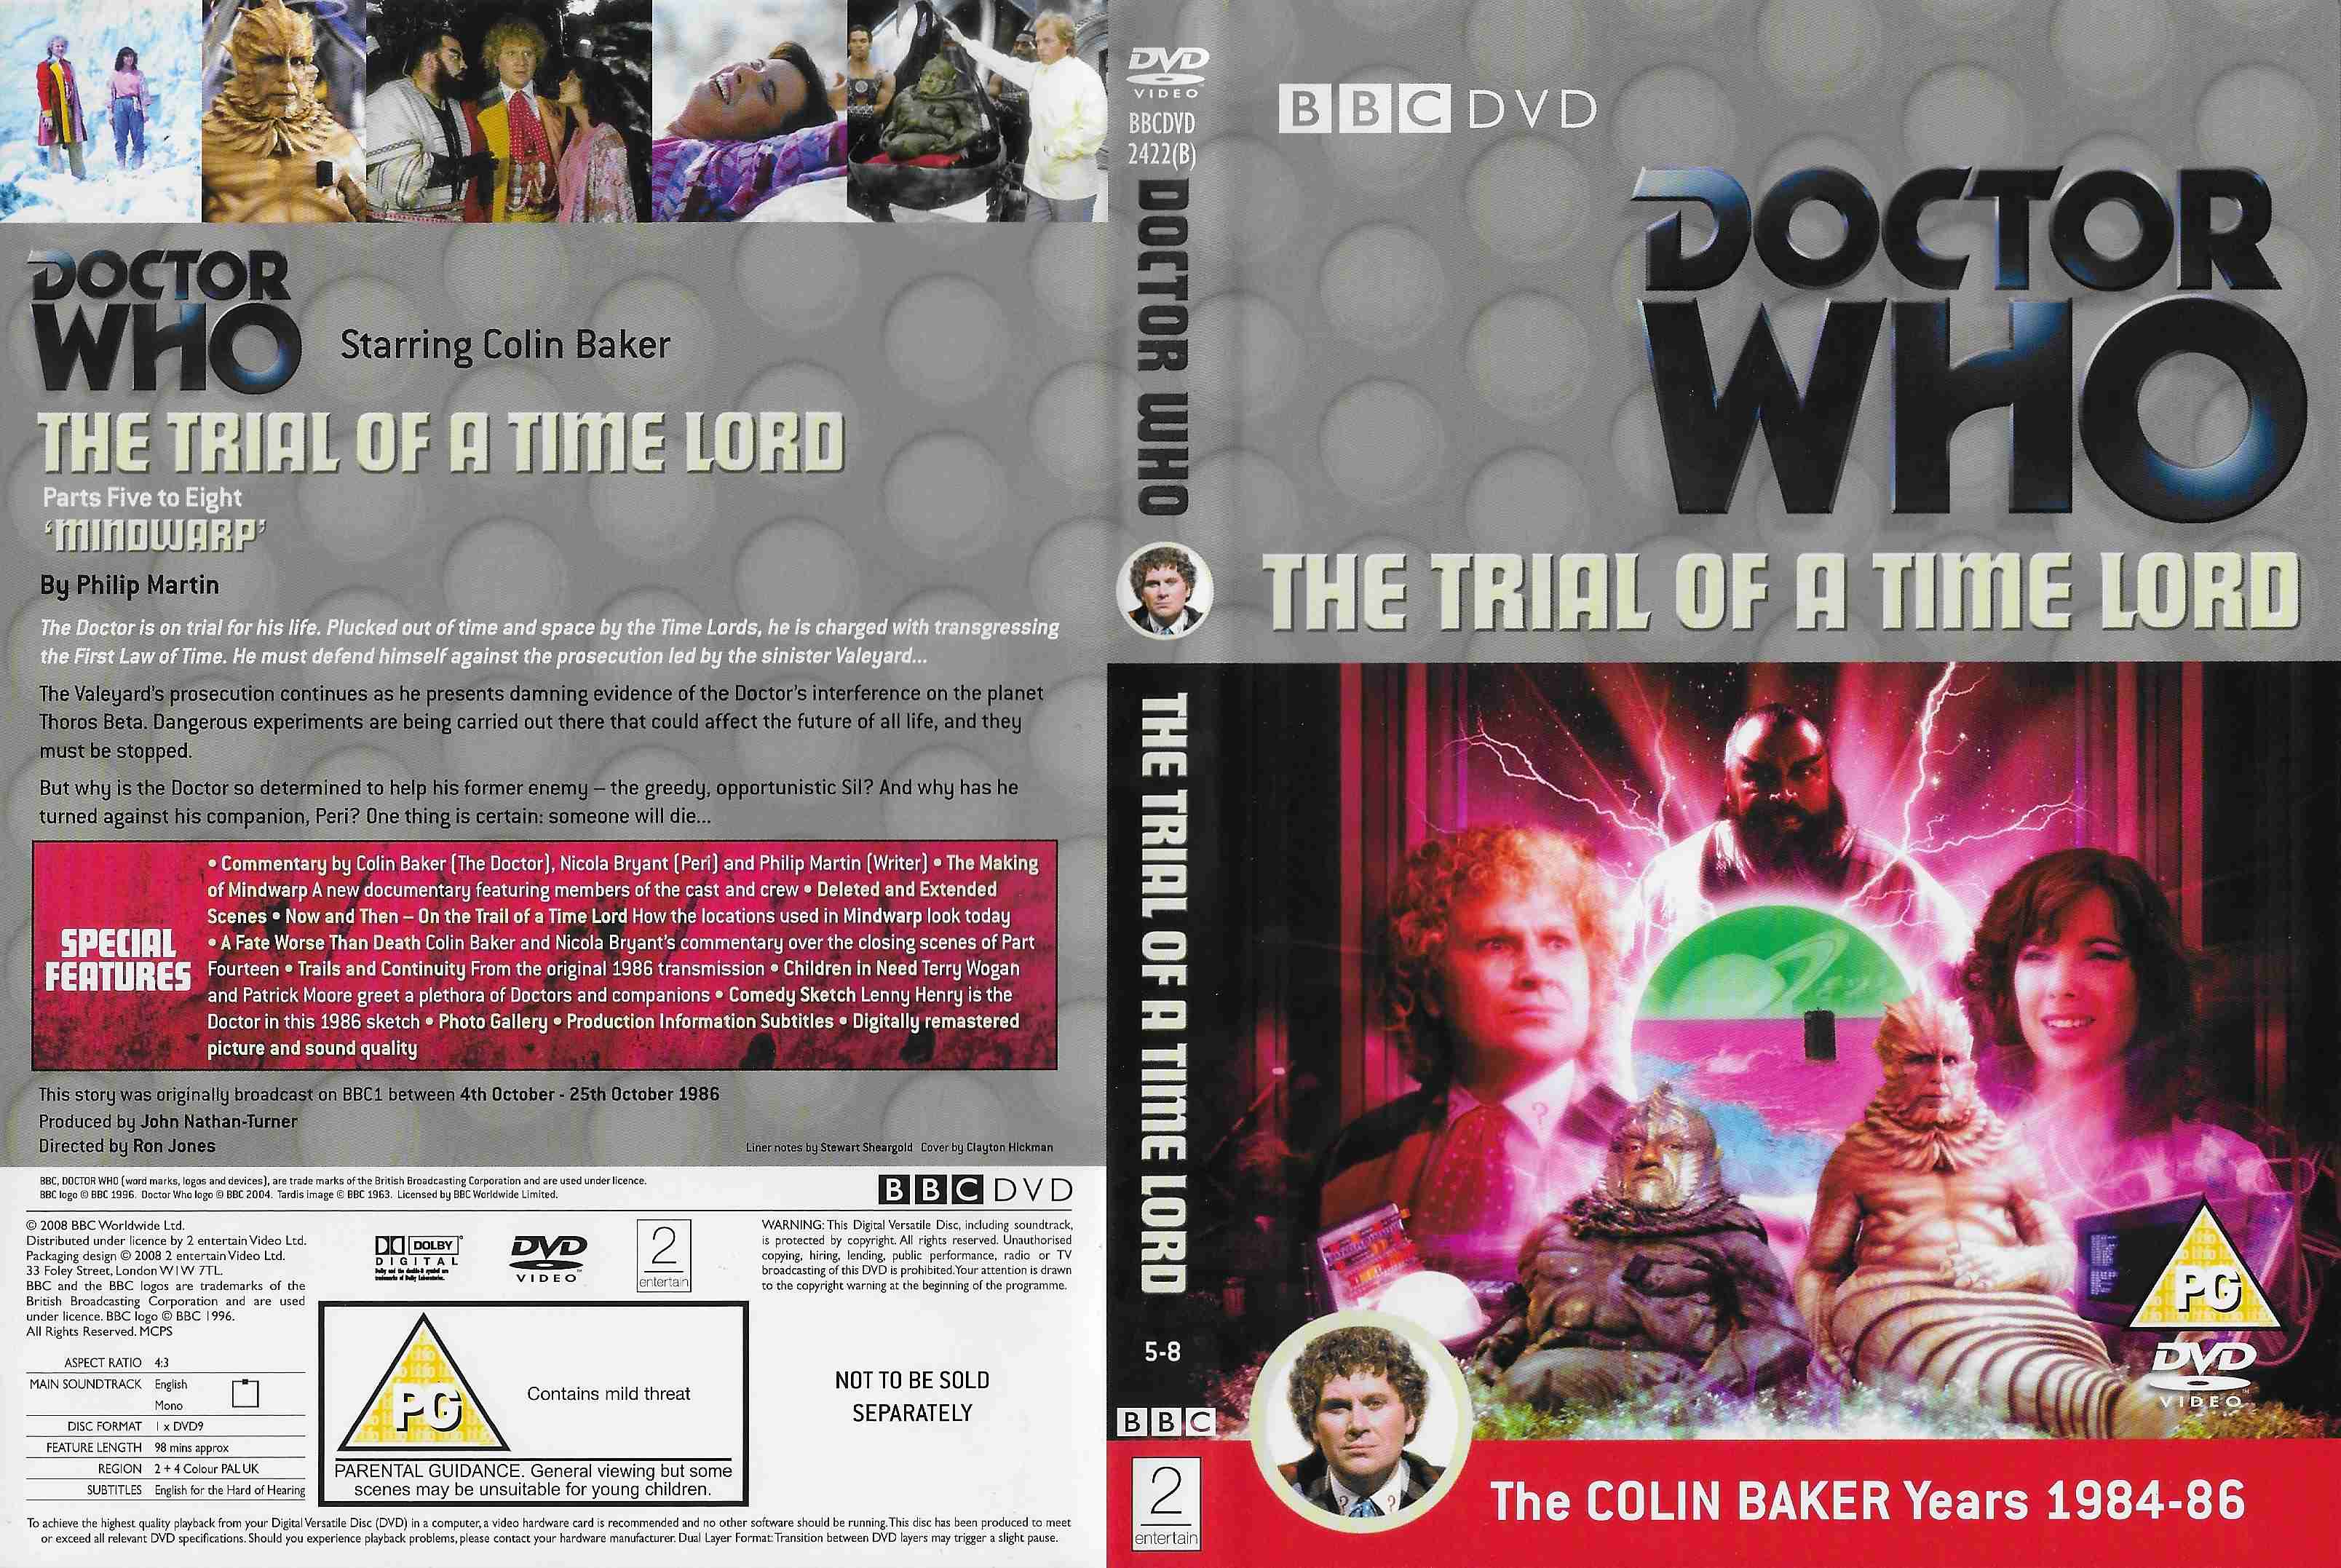 Back cover of BBCDVD 2422B